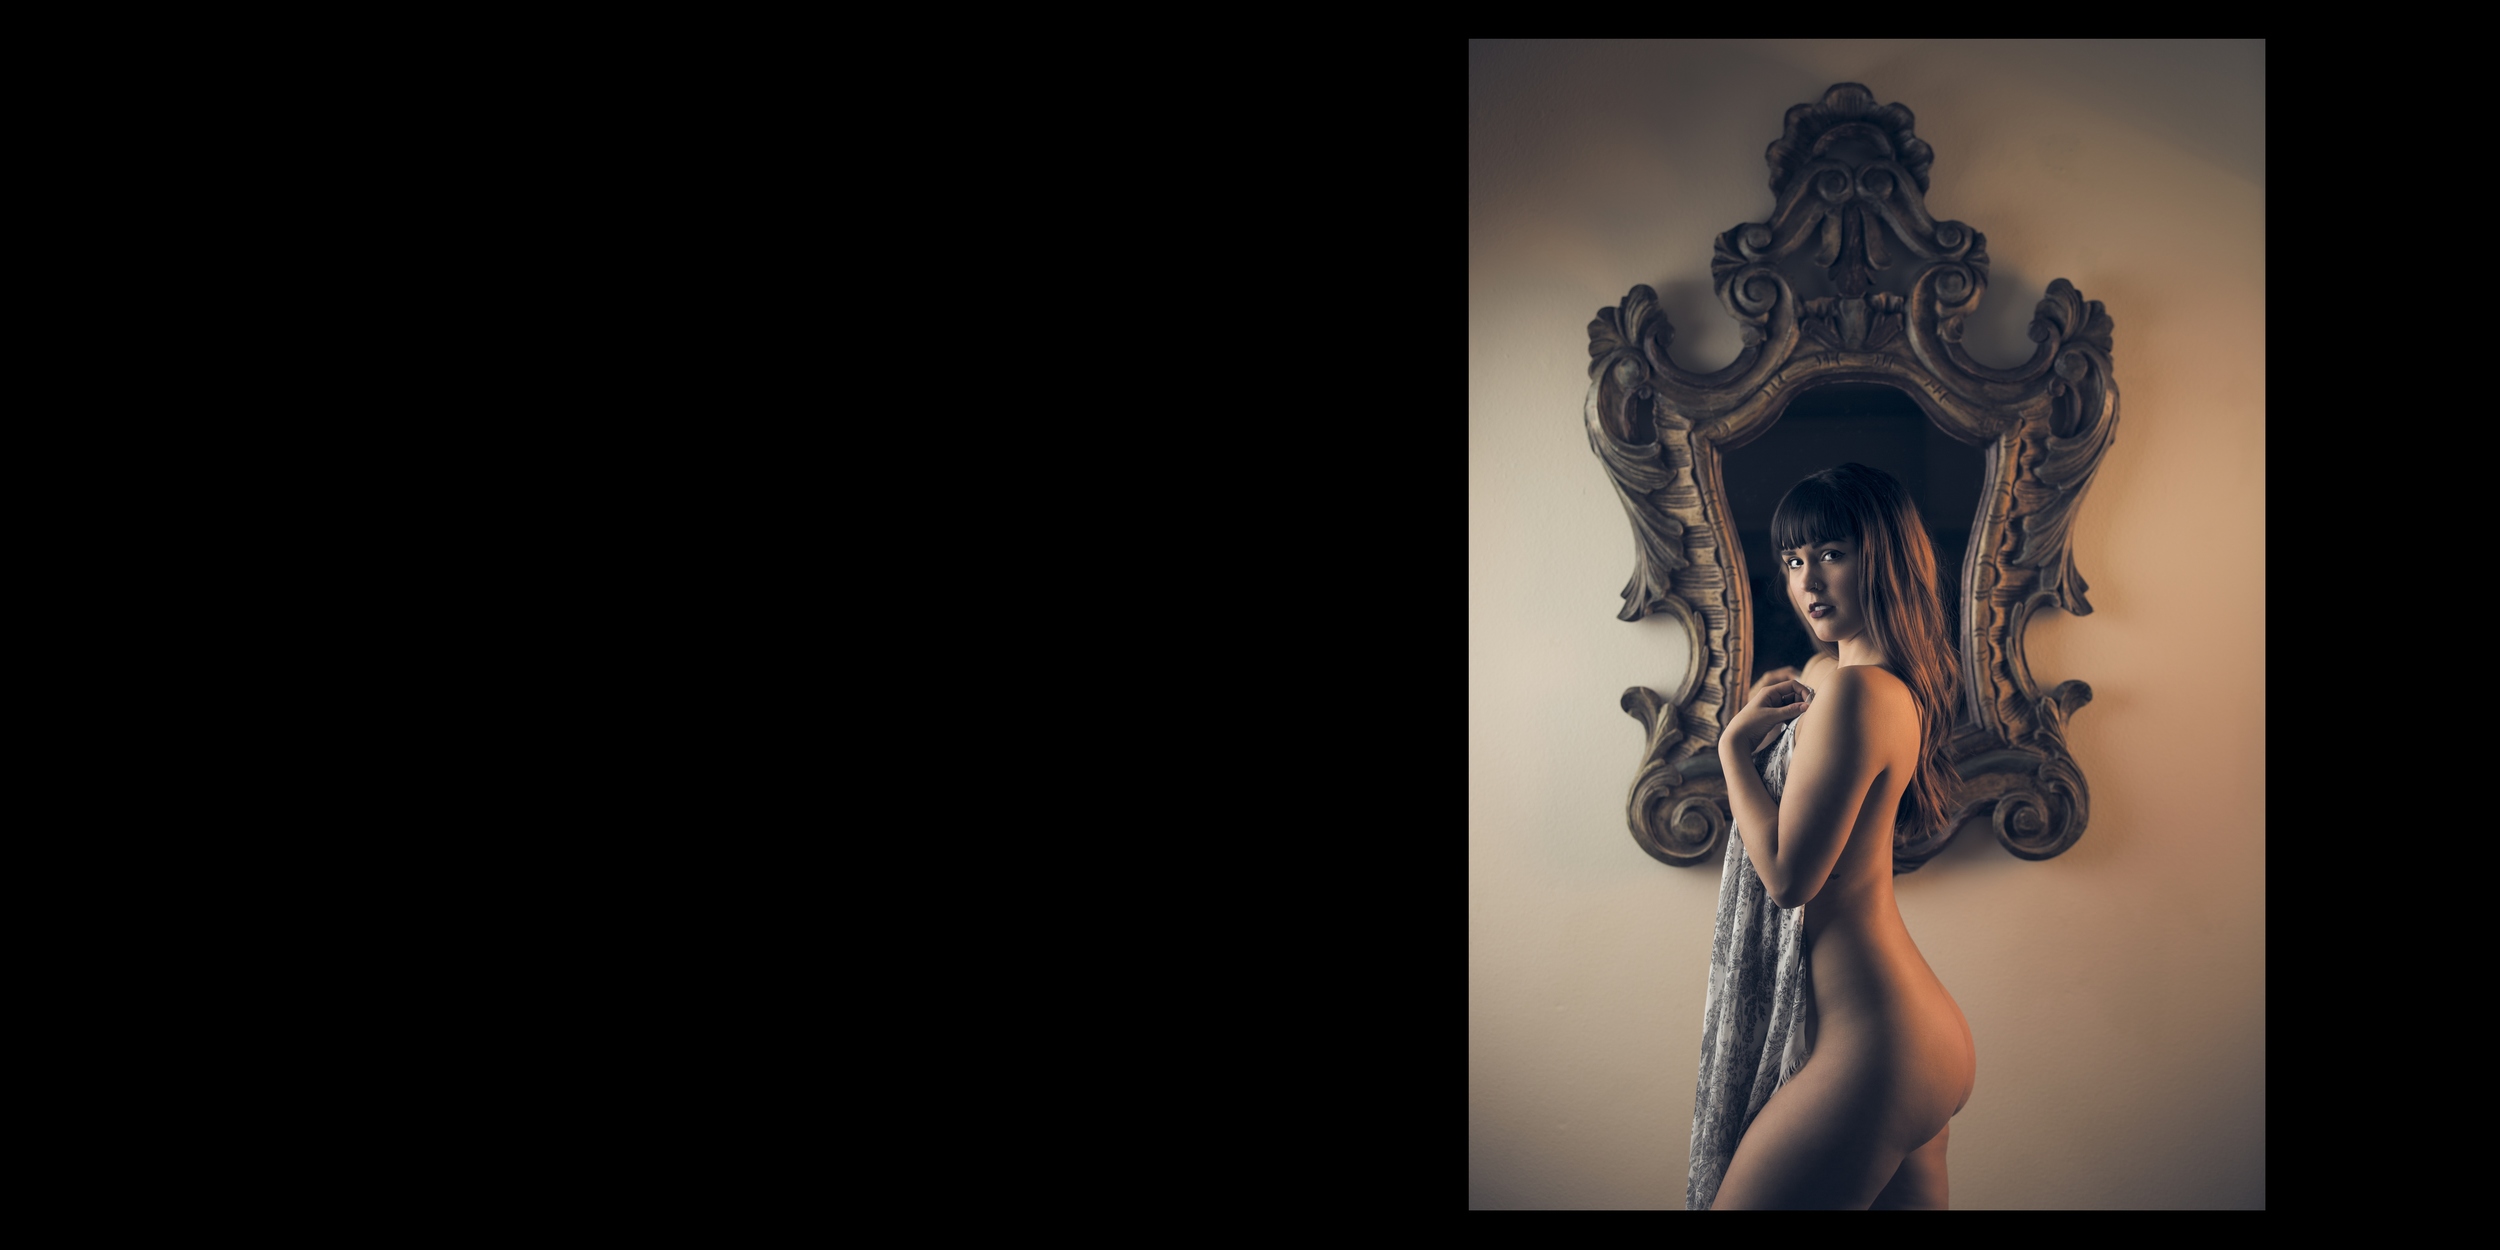 Classy implied nude boudoir photos